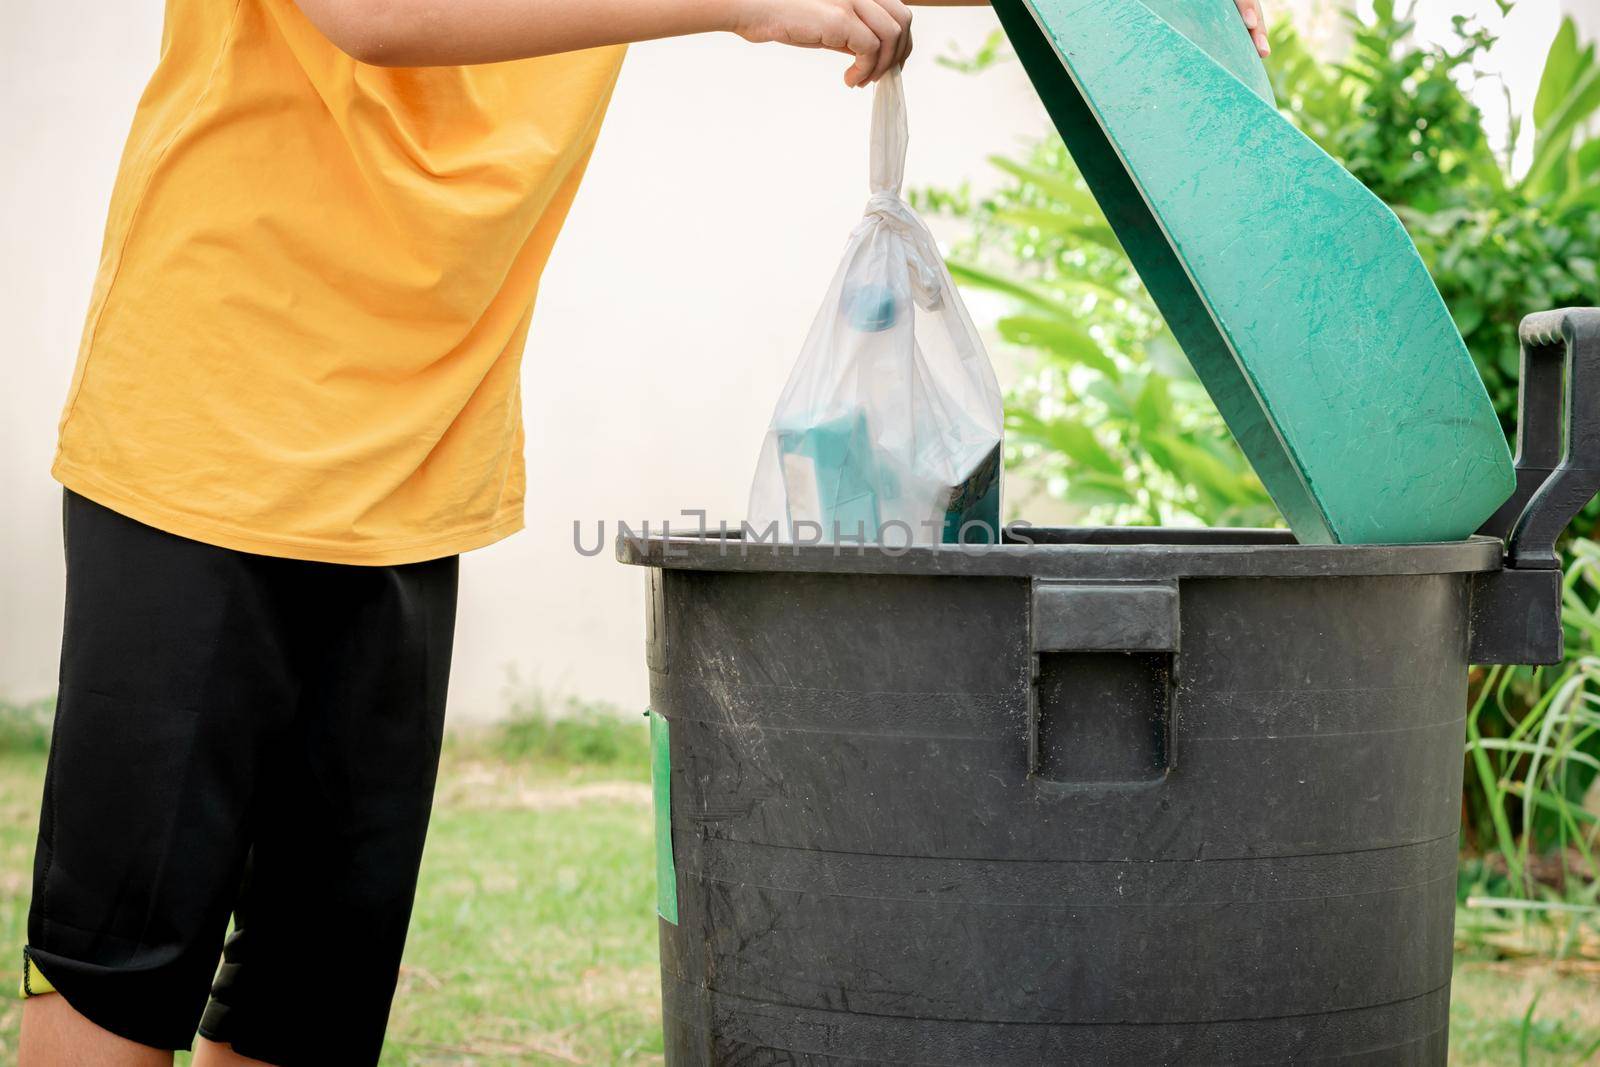 Throw trash in plastic bags into the trash. by wattanaphob